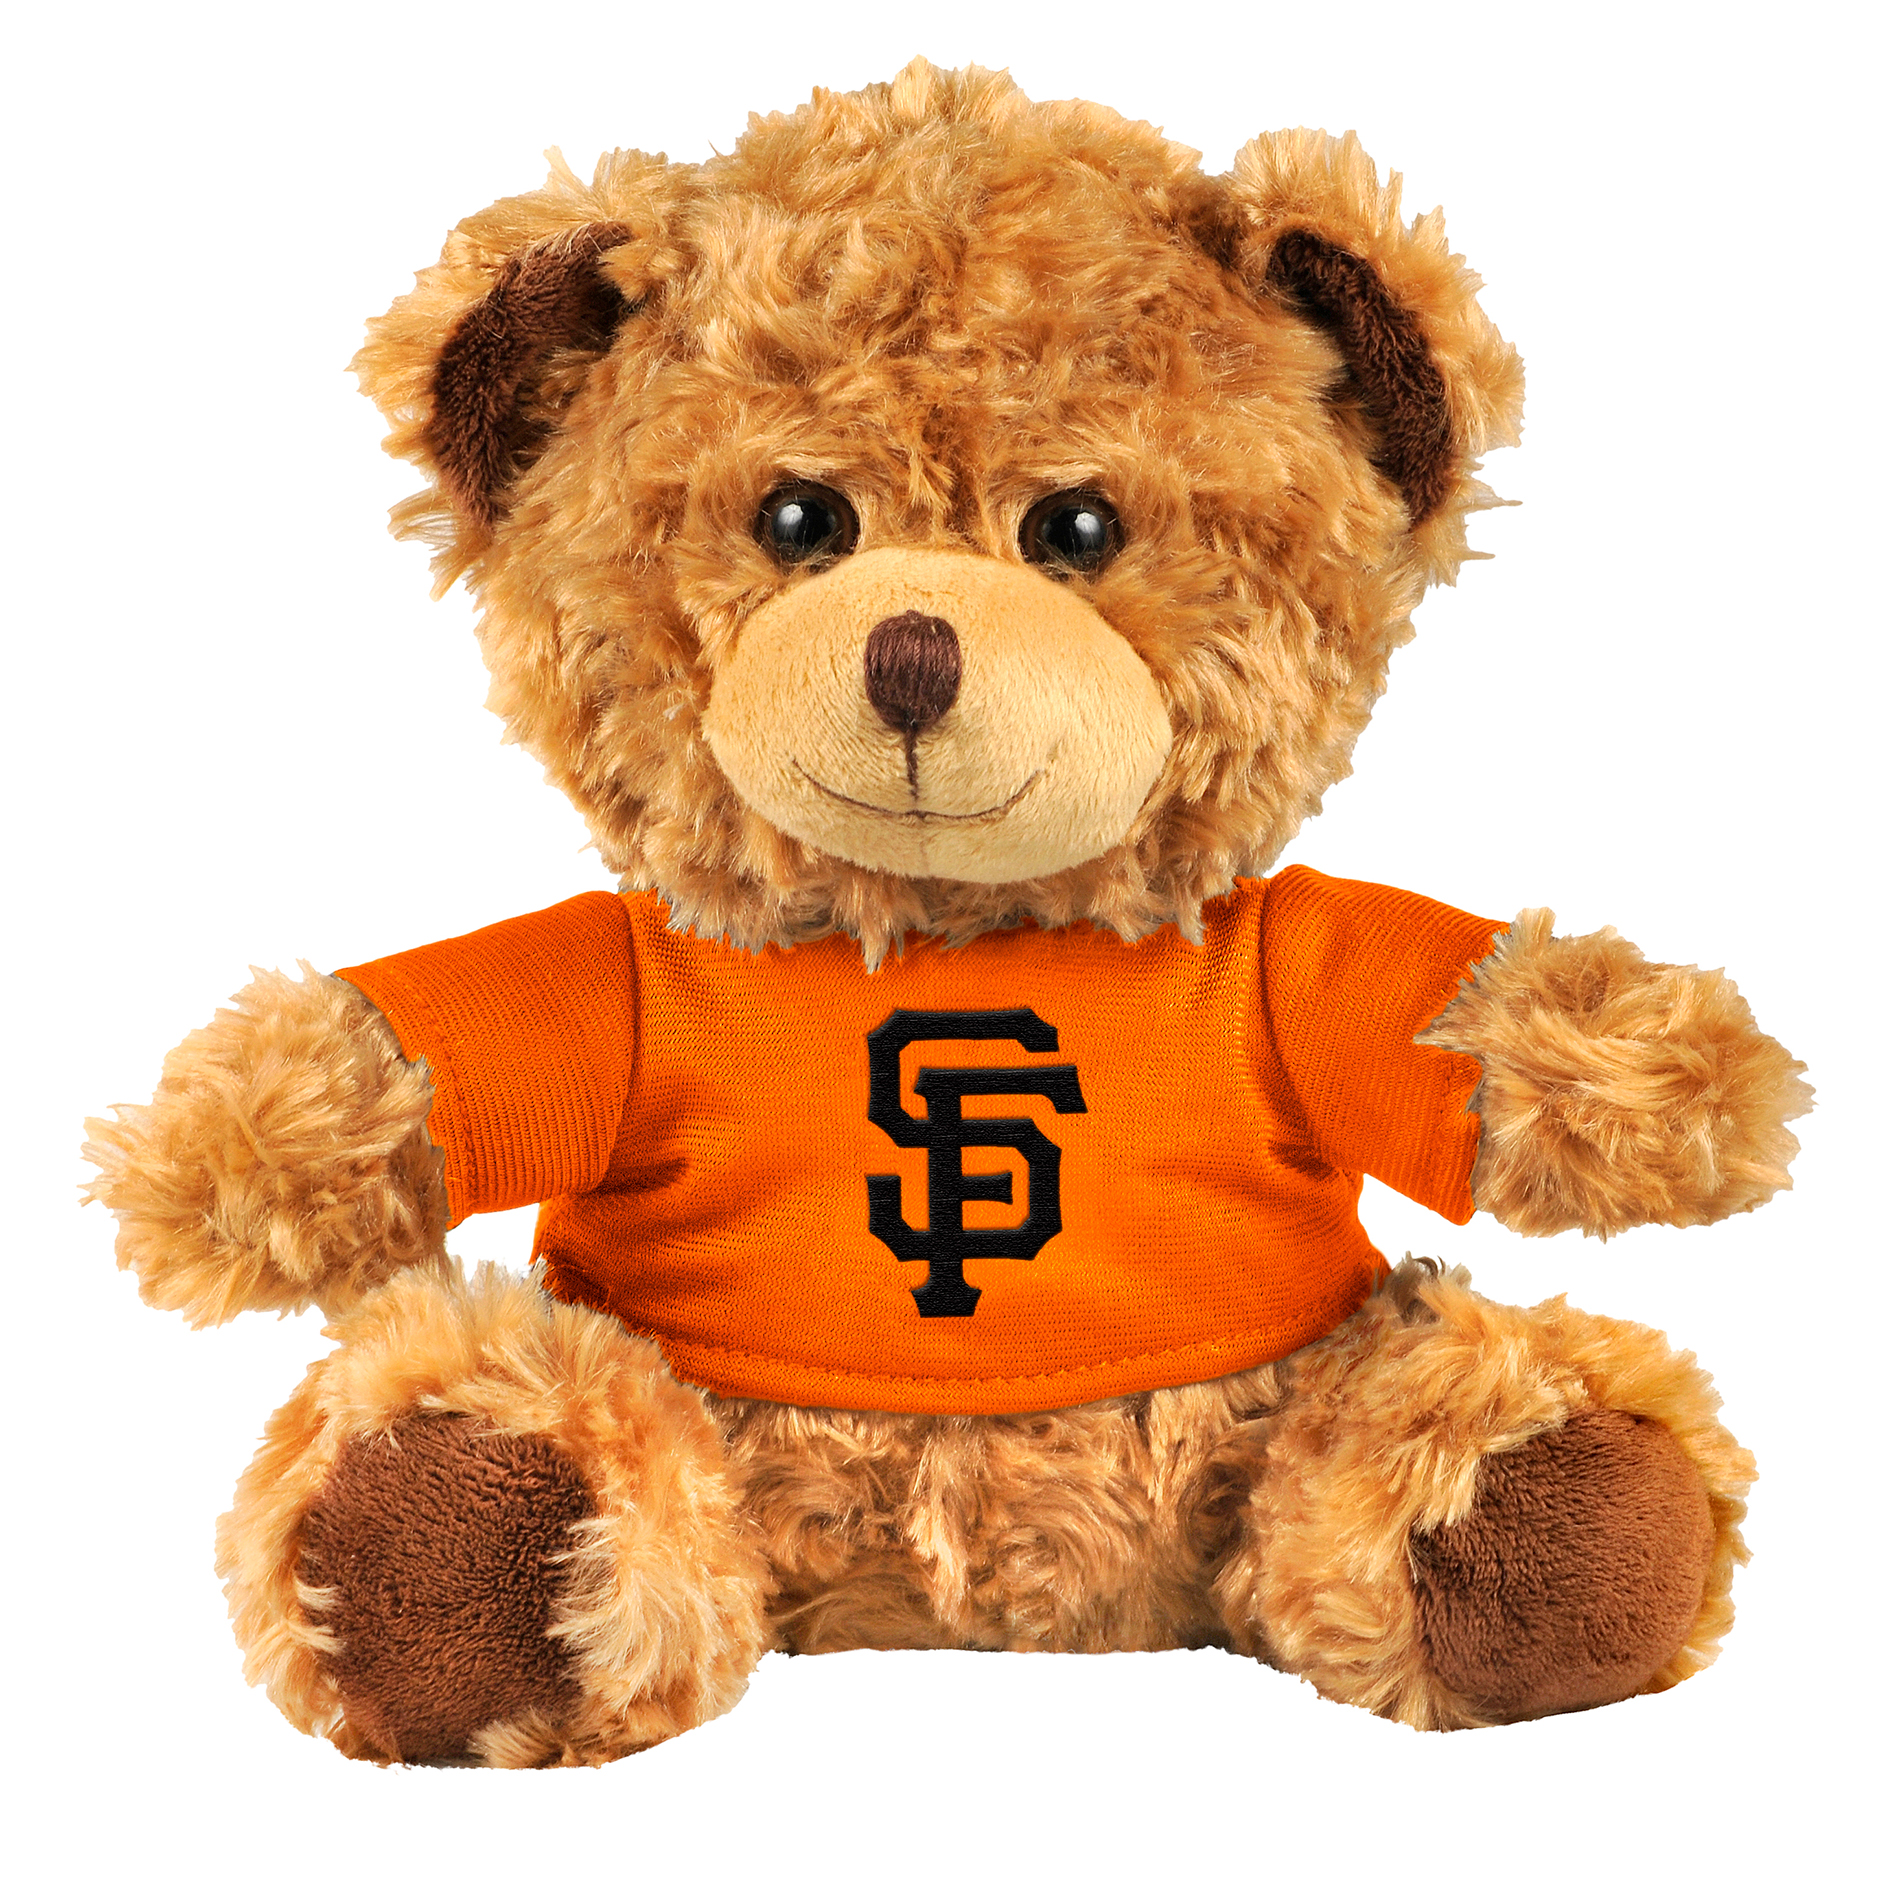 MLB Plush Teddy Bear - San Francisco Giants